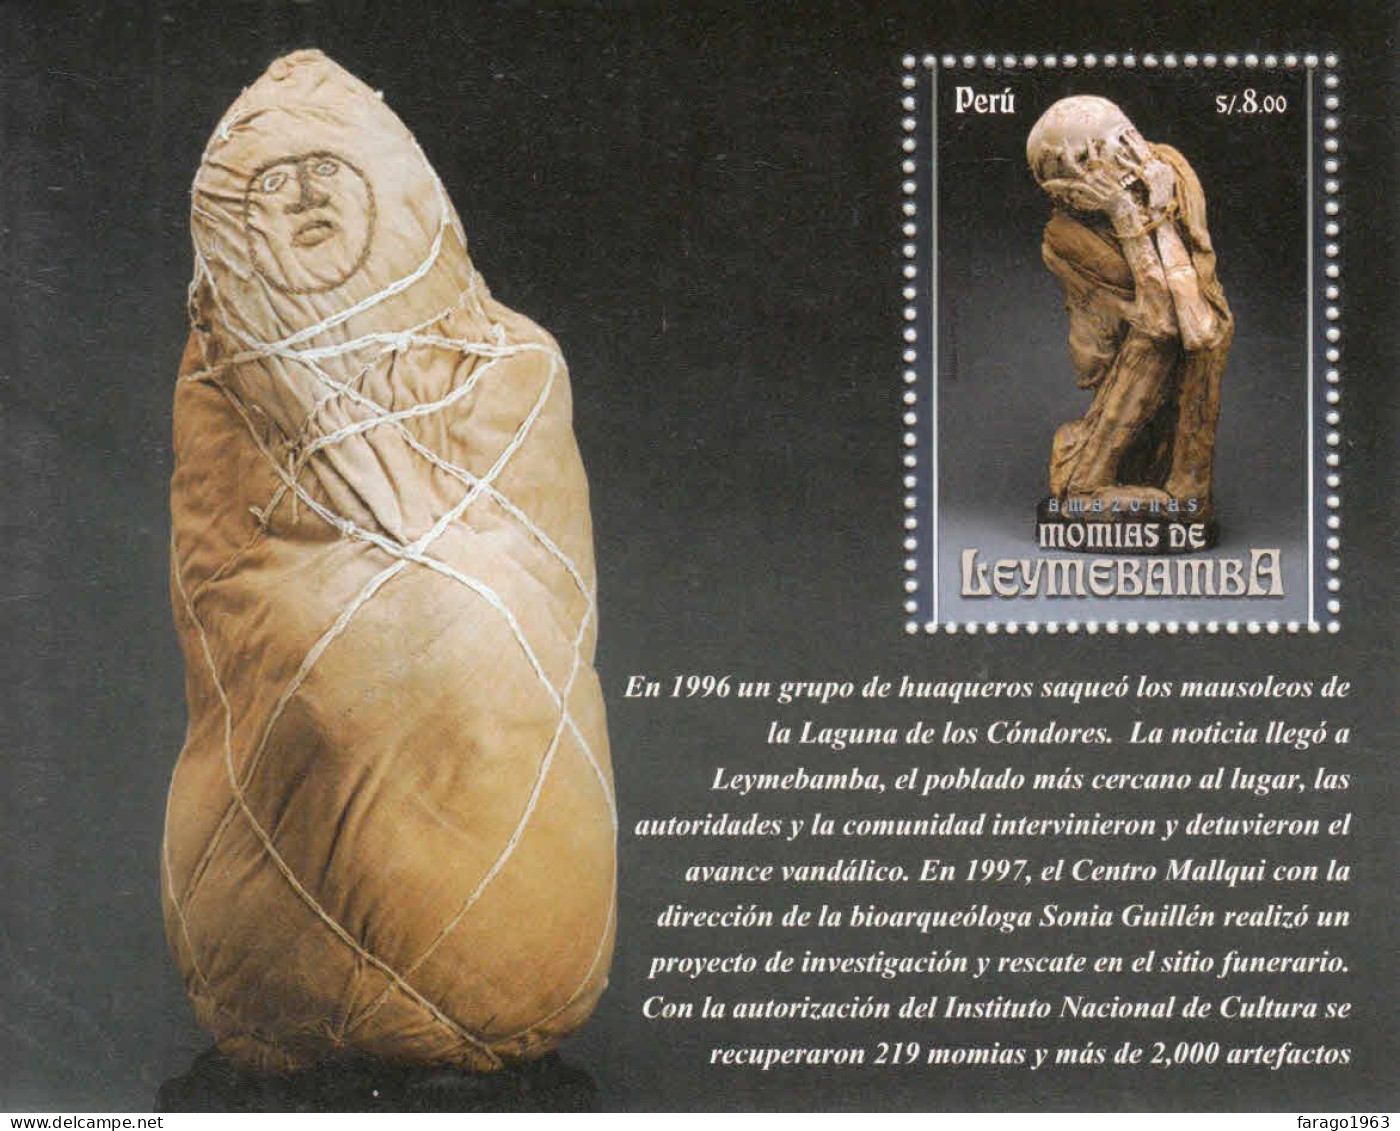 2014 Peru Leymebamba Mummies Archaeology  Souvenir Sheet MNH - Perù